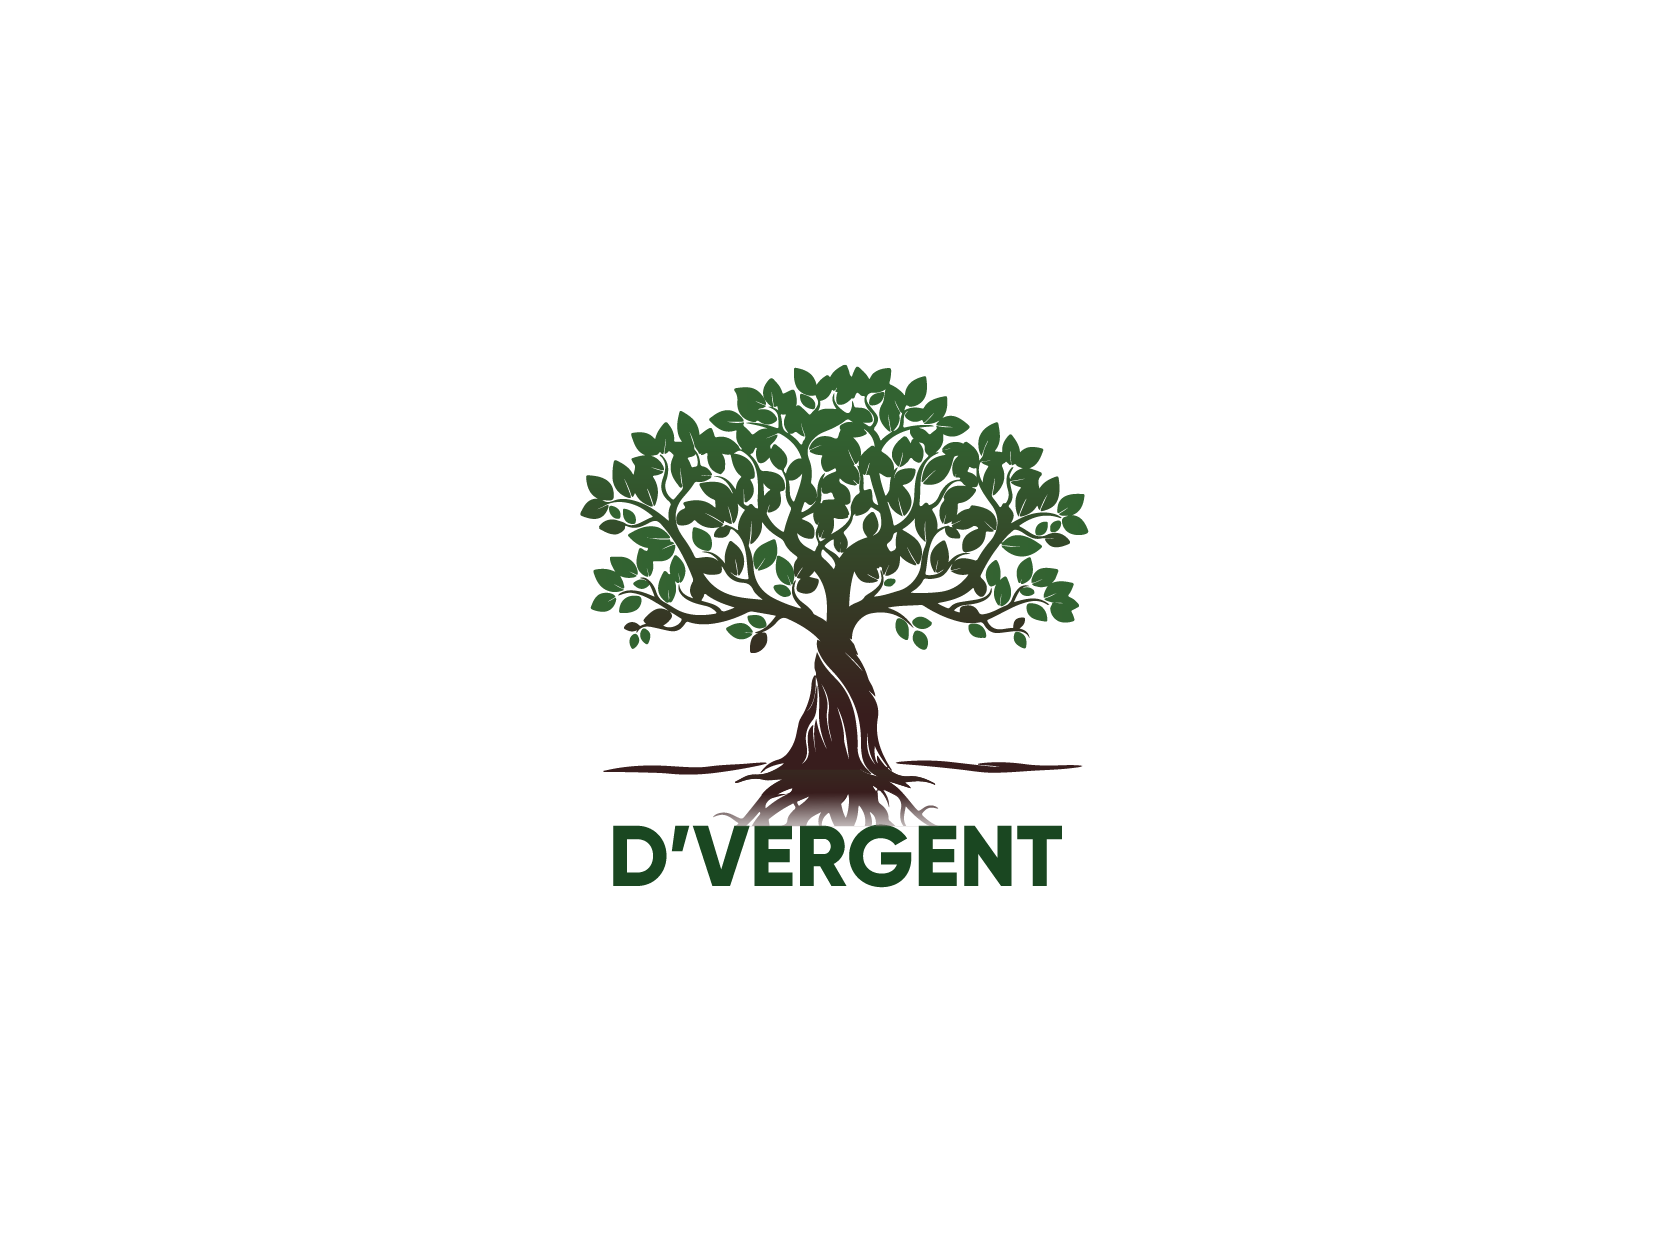  D’vergent Logo Design